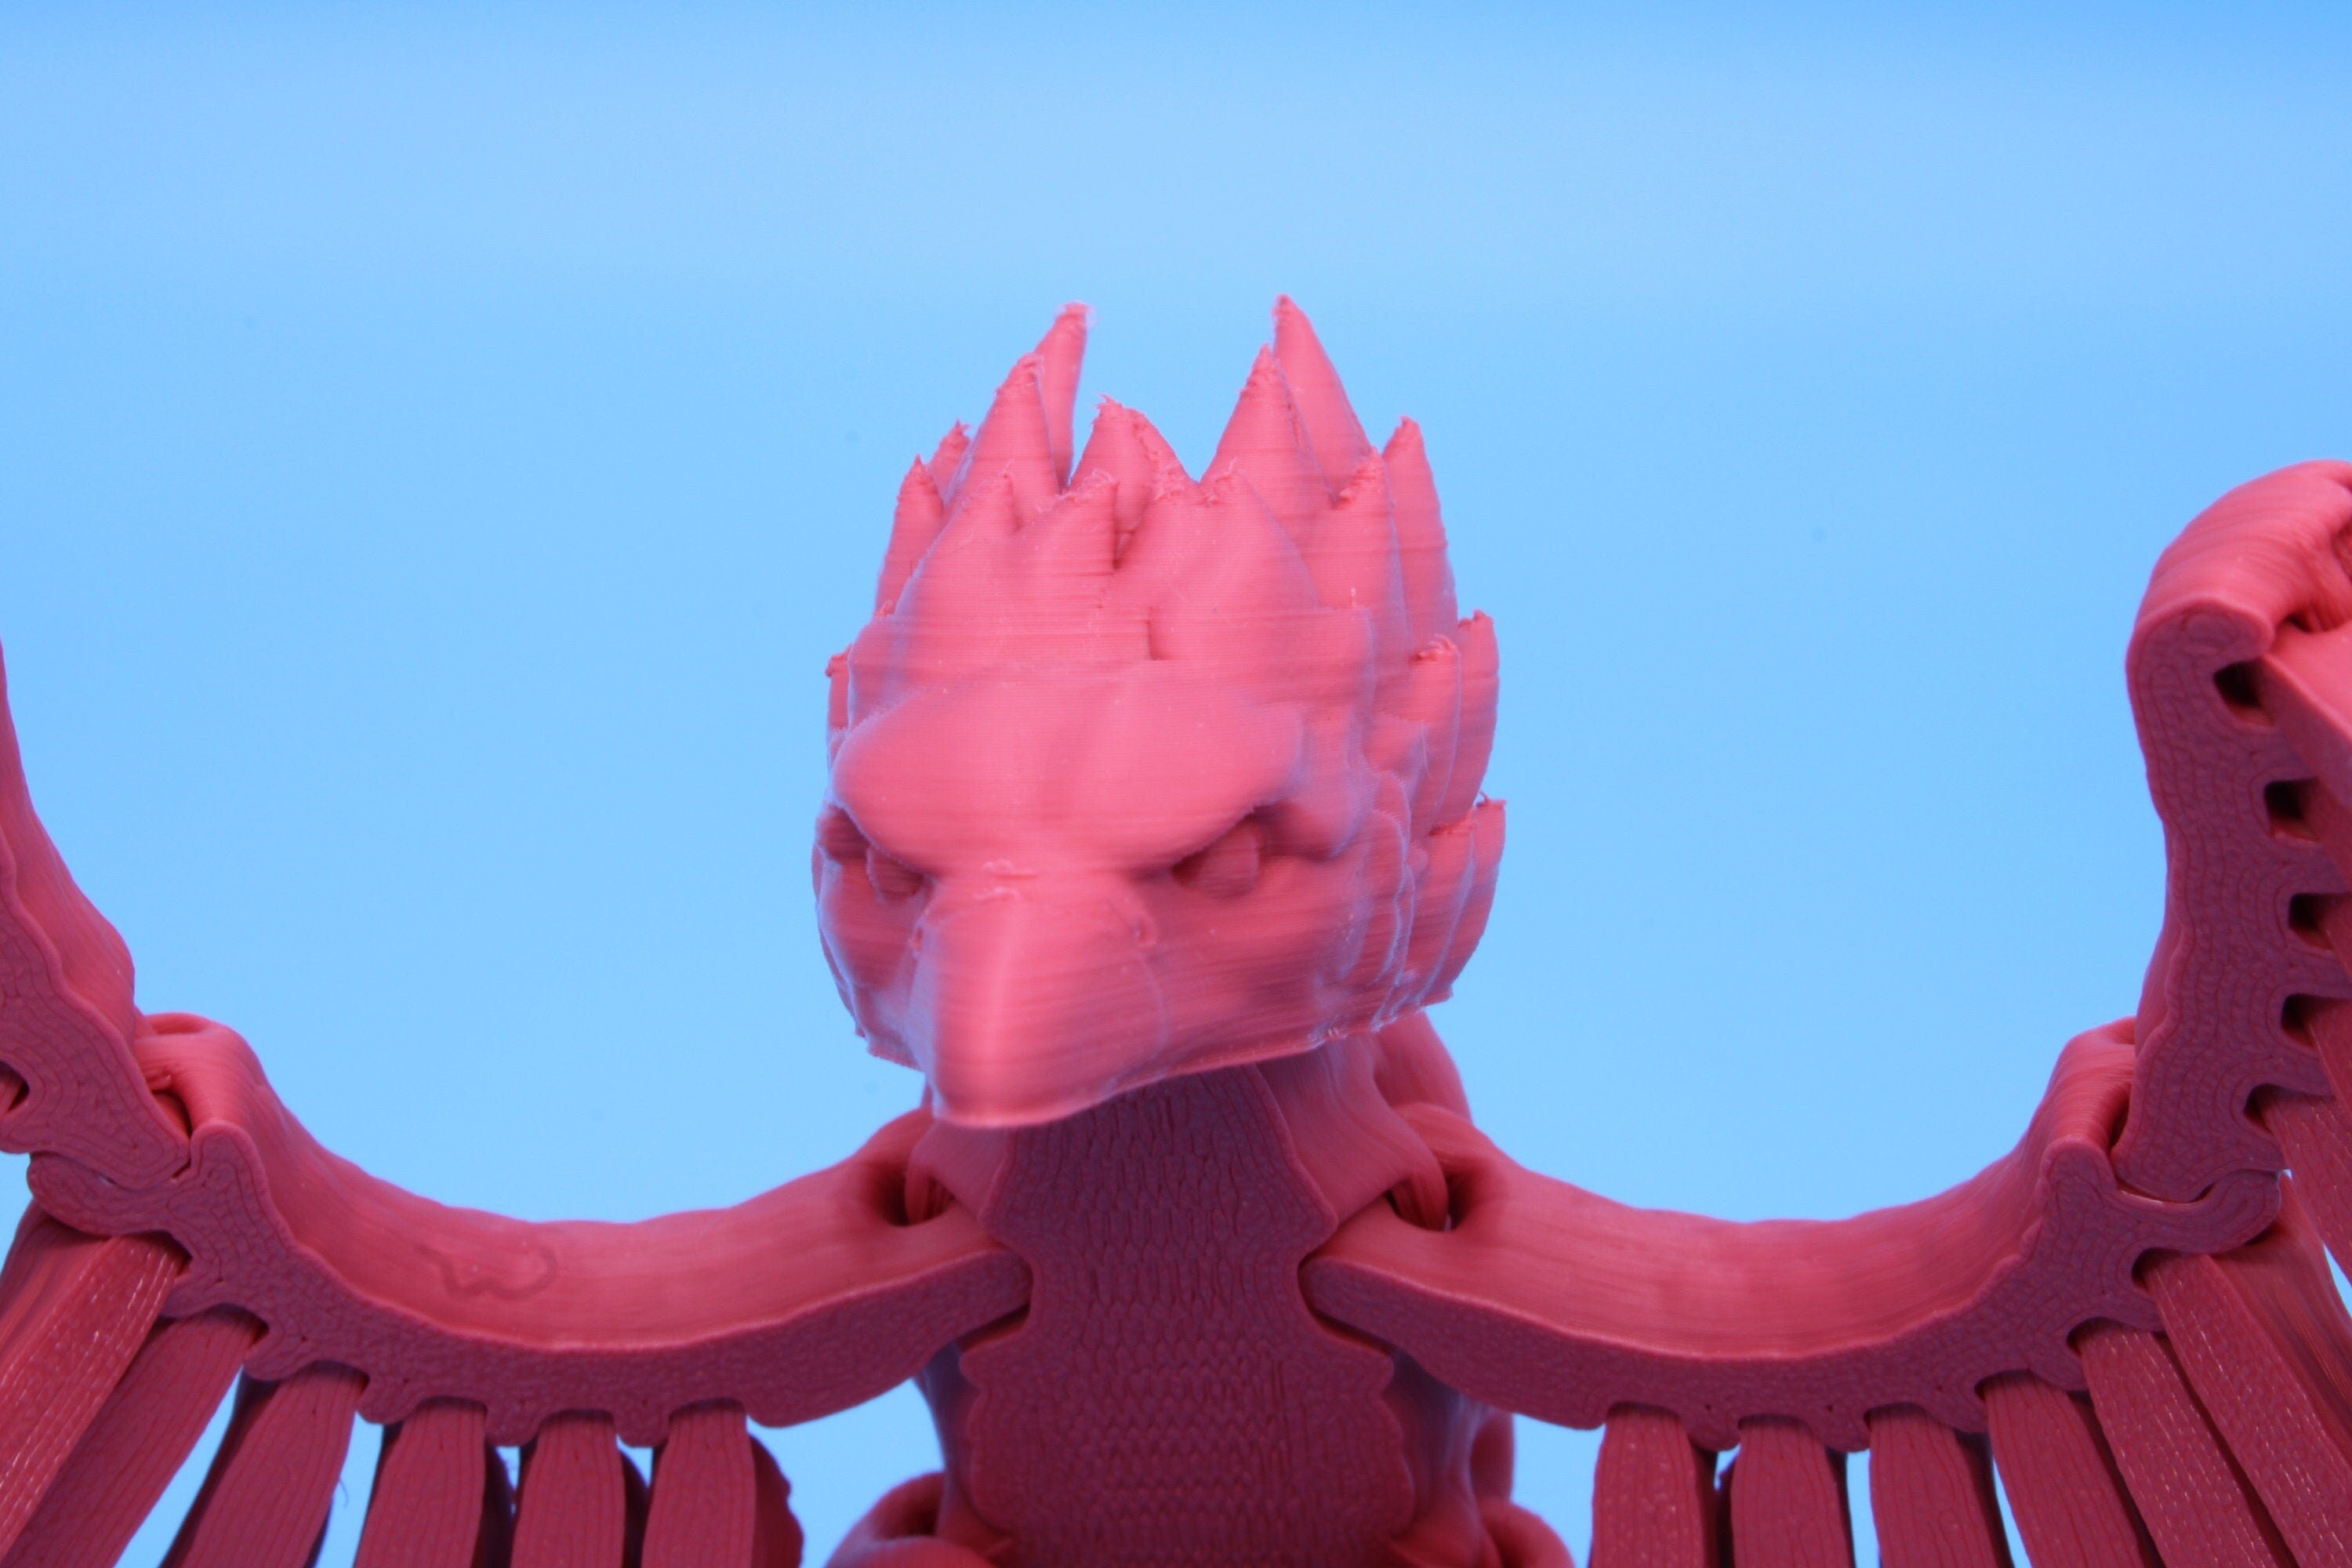 Cute Flexi Coral Phoenix. Unique 3D printed. Great Articulating fidget toy, desk, sensory toy. 4 inch Black, Pink, White